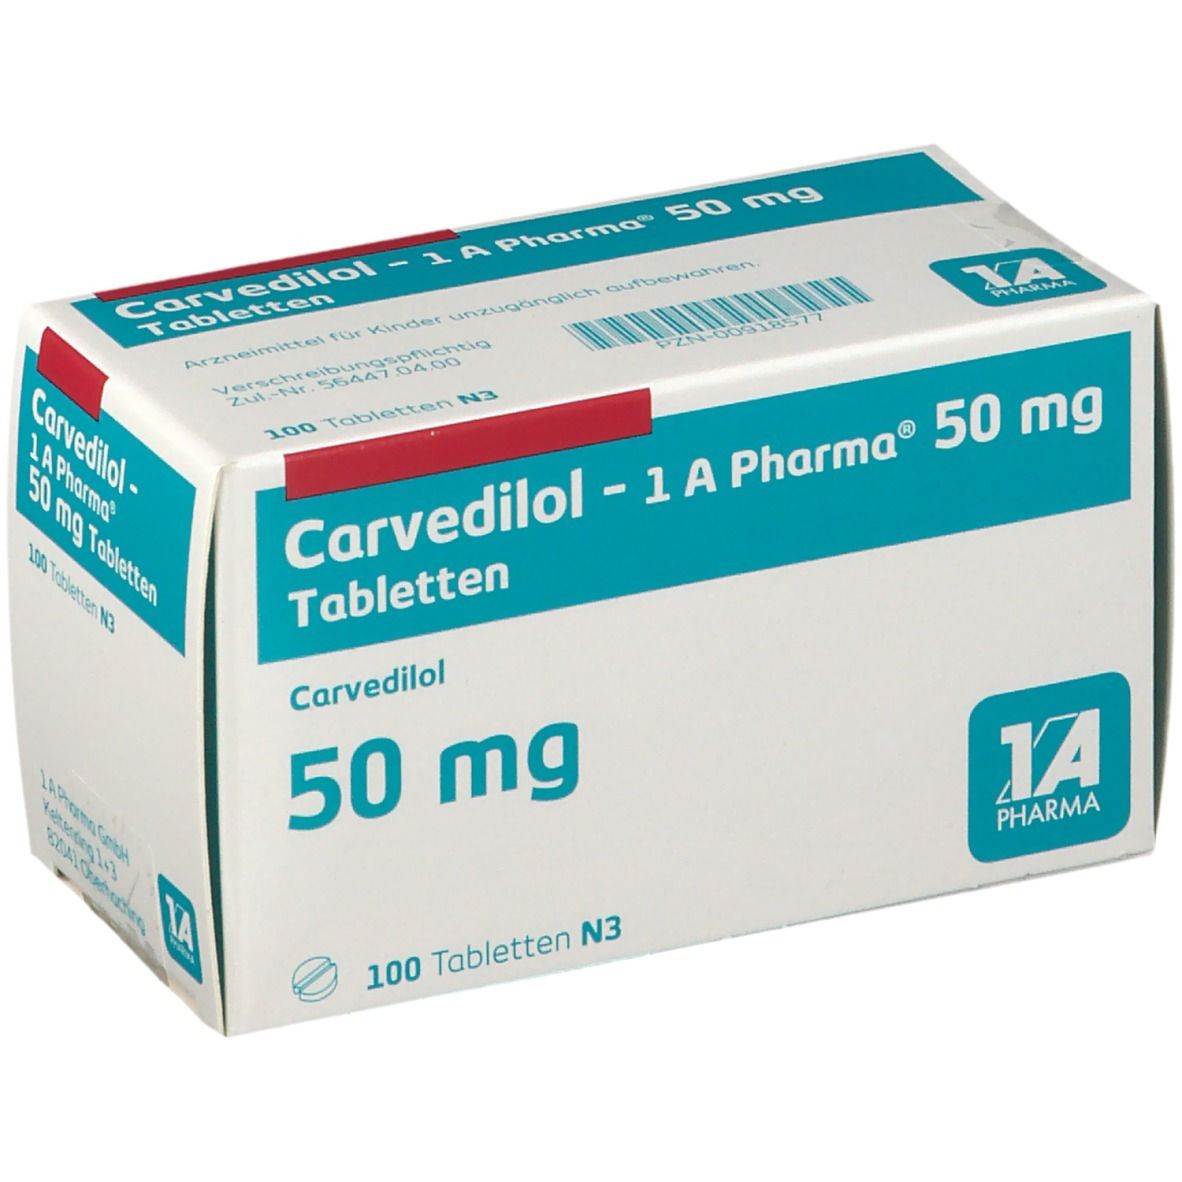 Carvedilol 1A Pharma® 50Mg